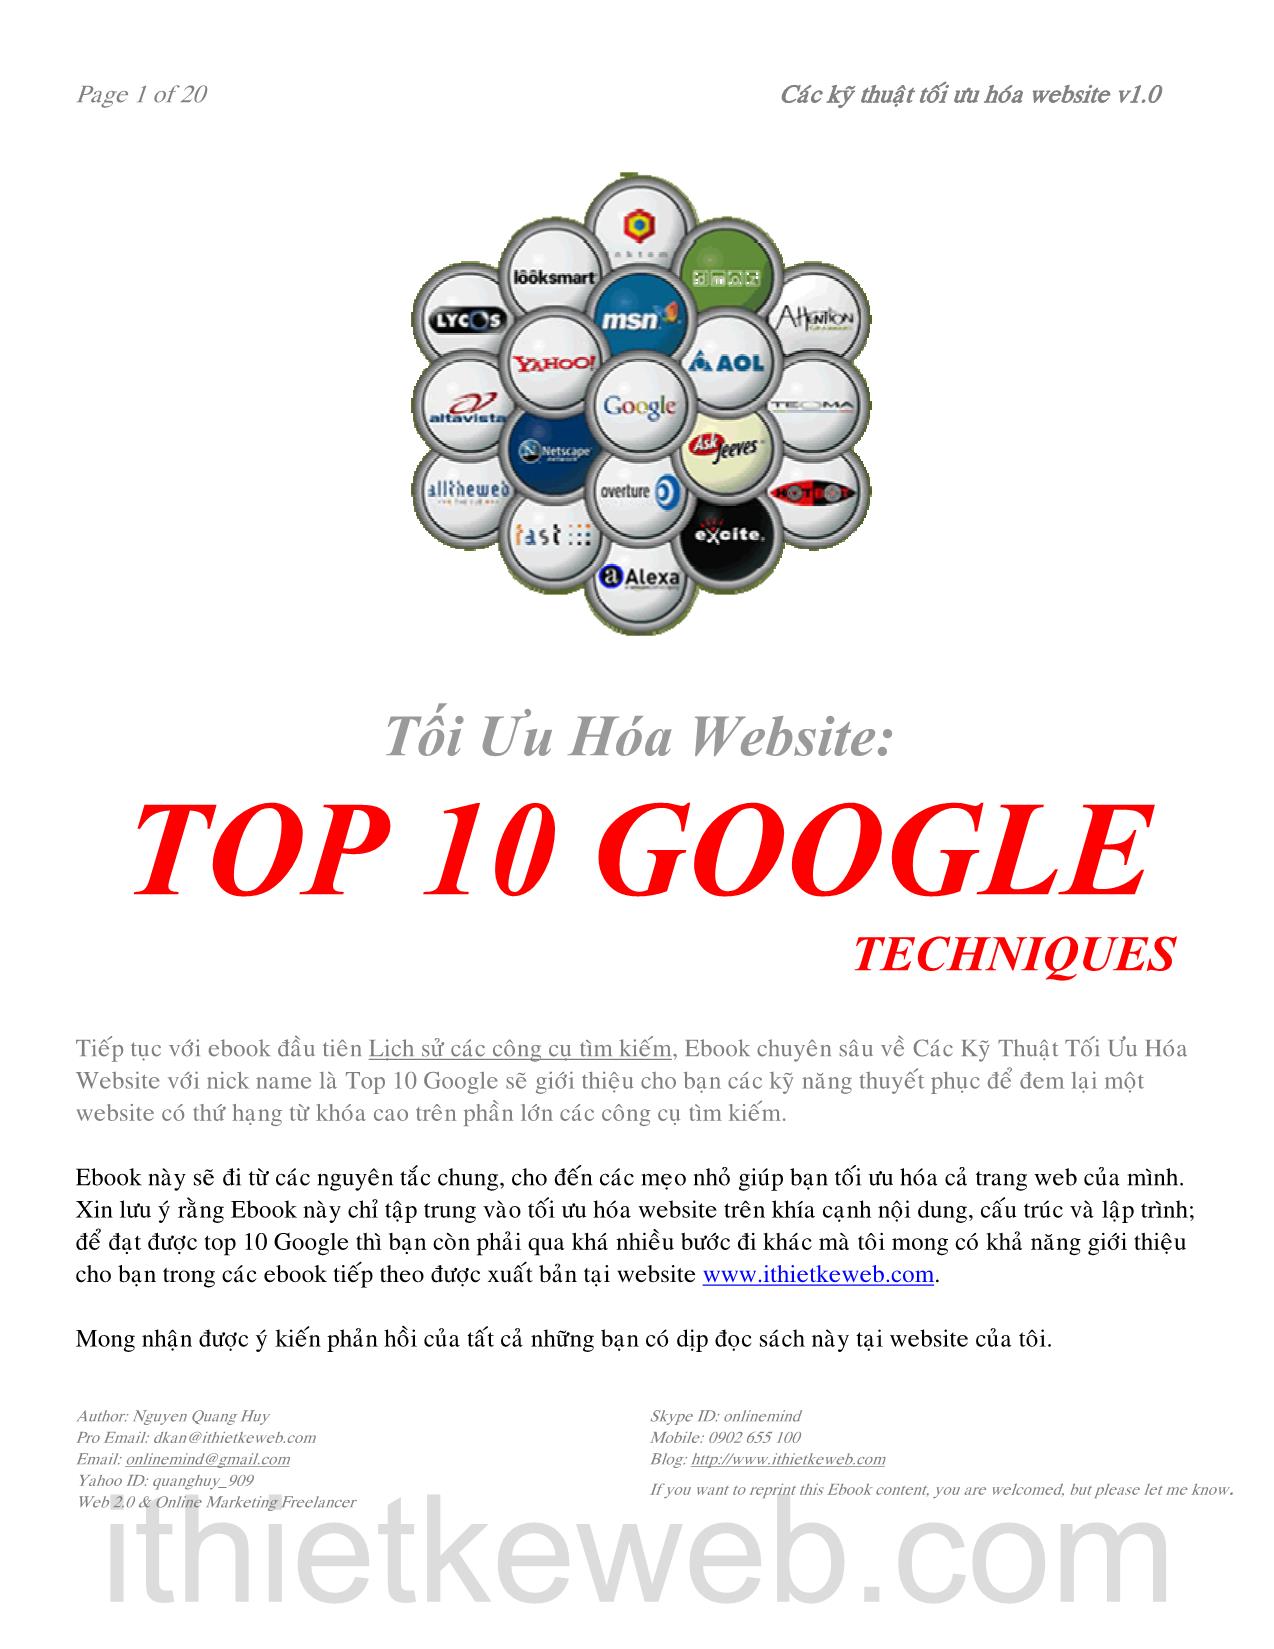 Tối ưu hóa Website - Top 10 Google trang 1